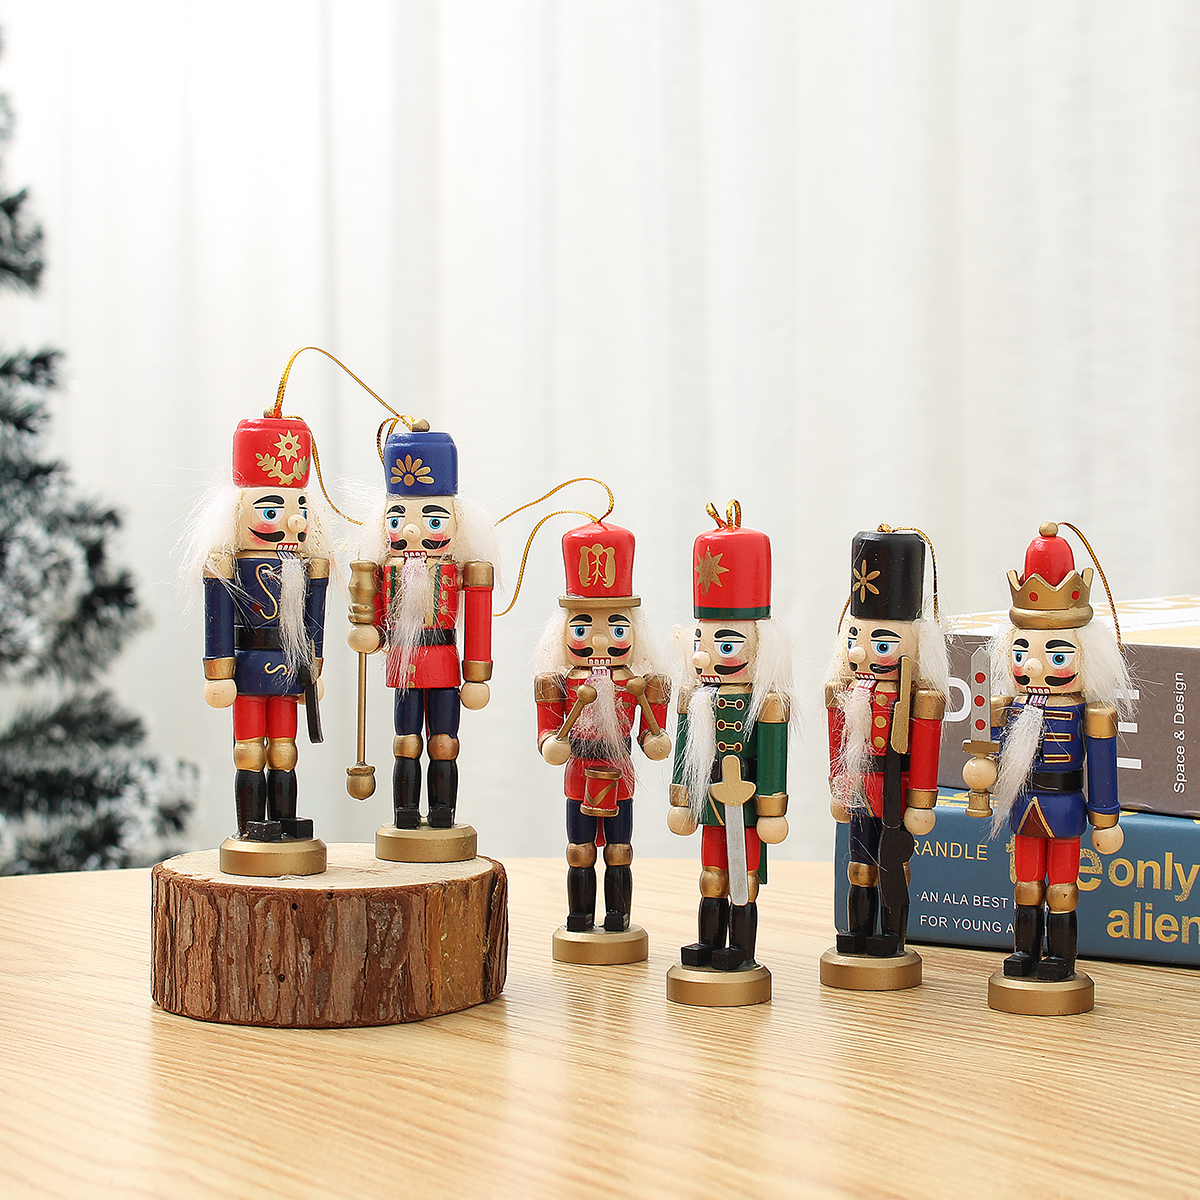 Wooden-Nutcracker-Doll-Soldier-Vintage-Handcraft-Decoration-Christmas-Gifts-1787904-4